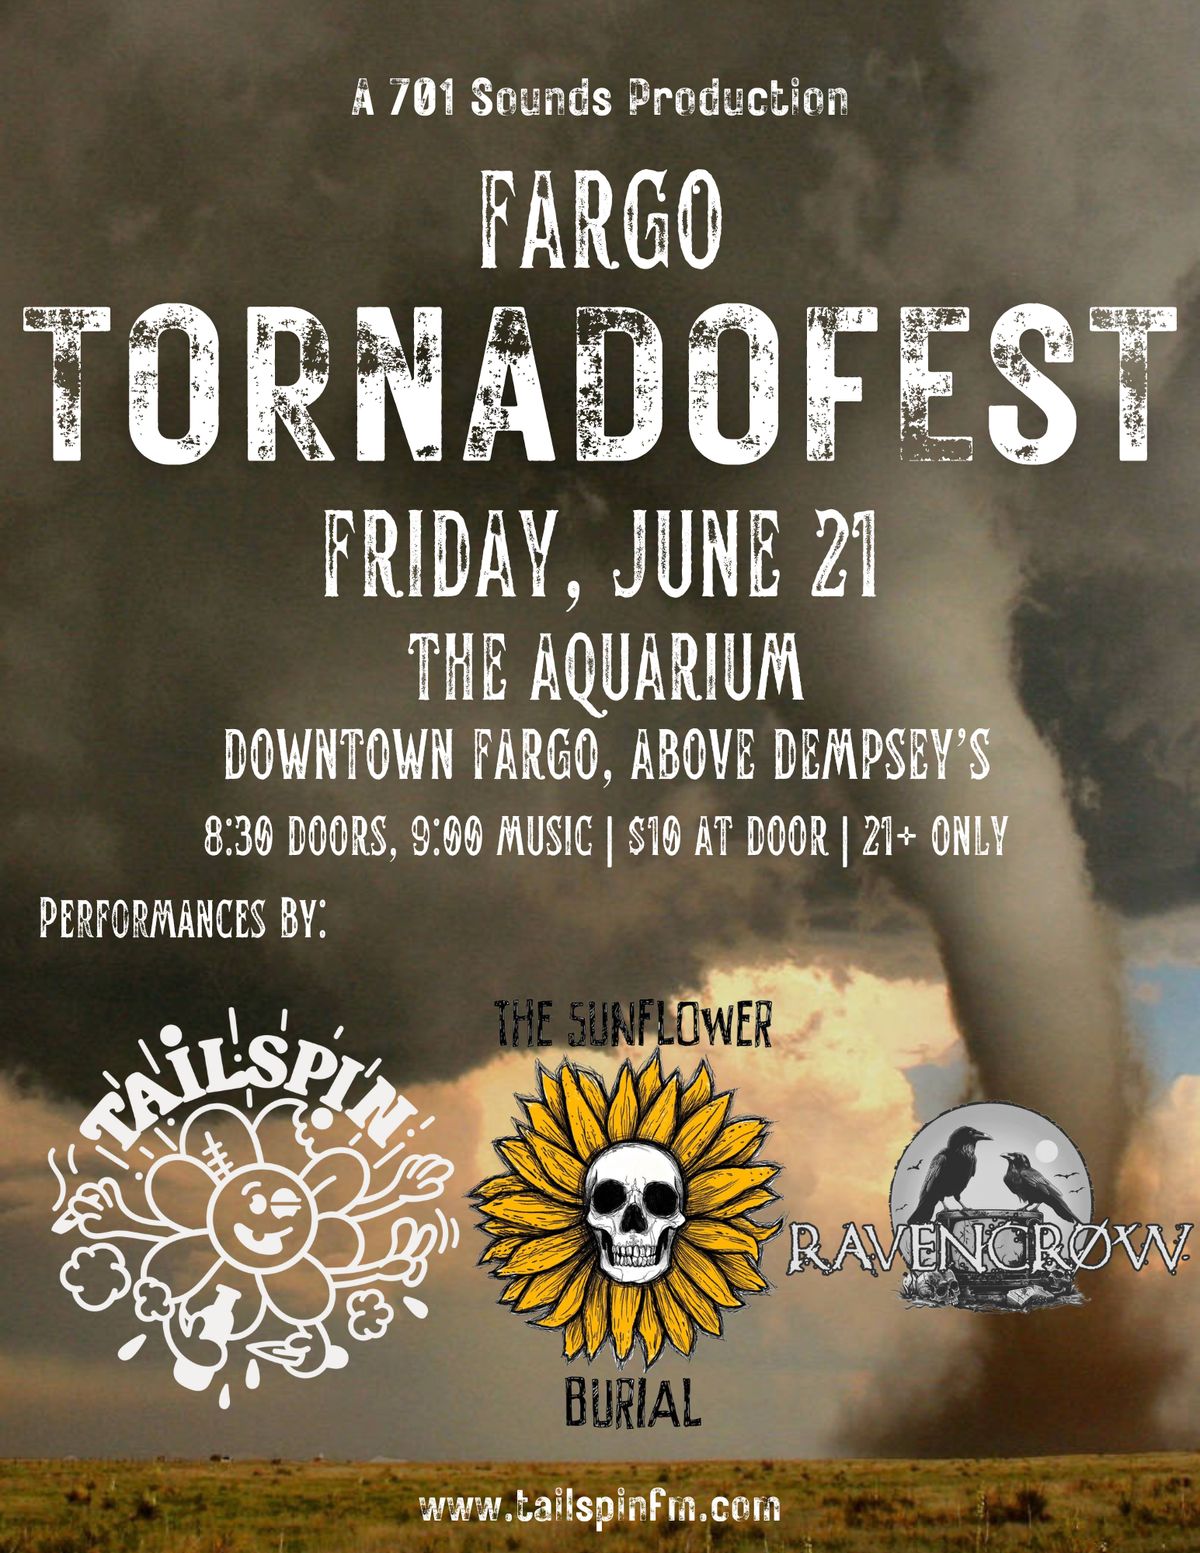 Fargo TornadoFest: Tailspin, The Sunflower Burial, & Ravencrow